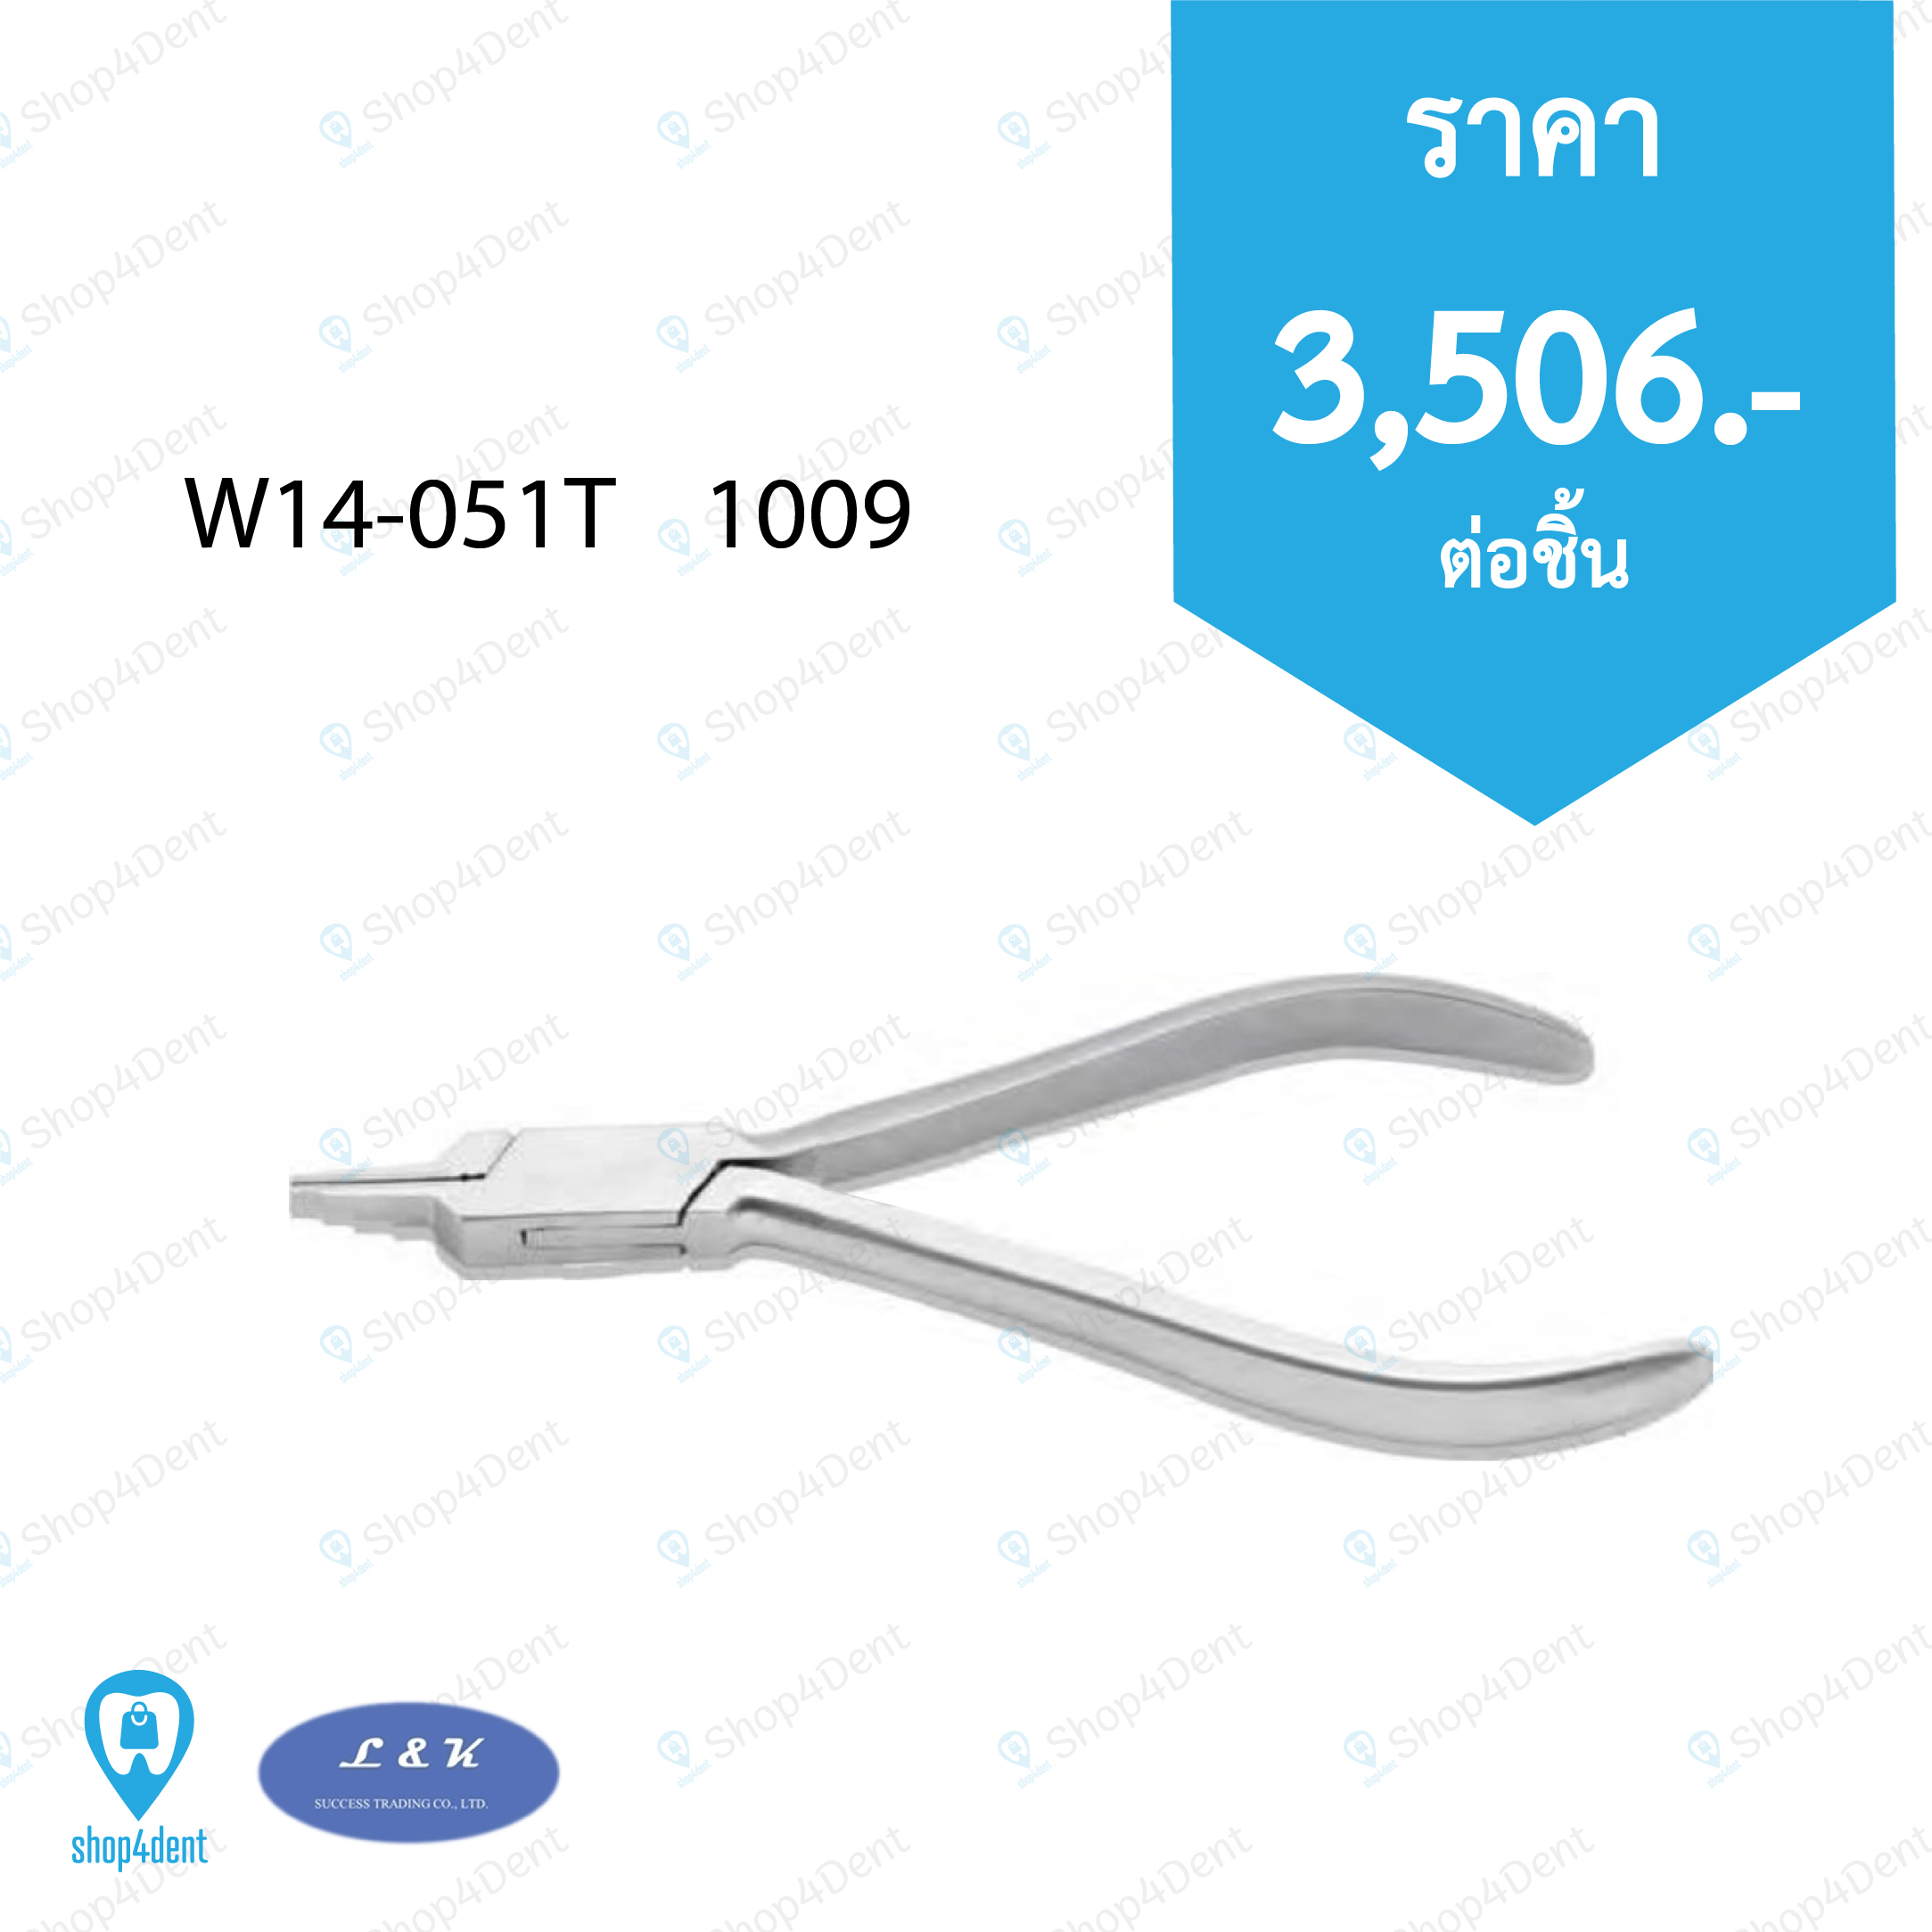 Orthodontic Pliers_W14-051T    1009